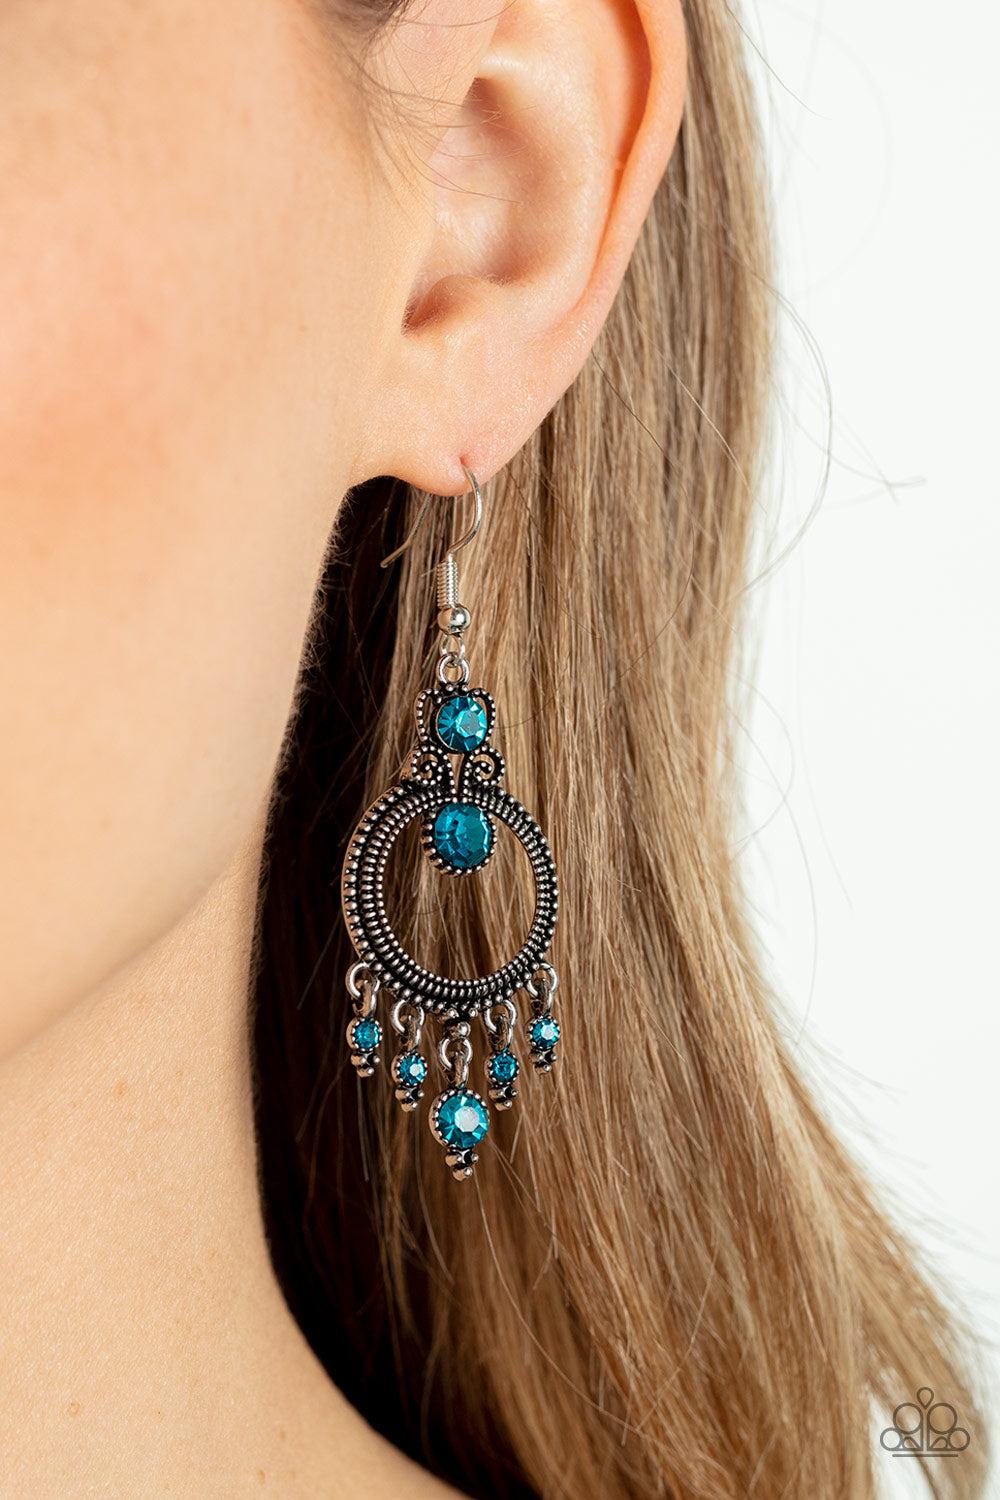 Palace Politics Blue Rhinestone Earrings - Paparazzi Accessories- lightbox - CarasShop.com - $5 Jewelry by Cara Jewels